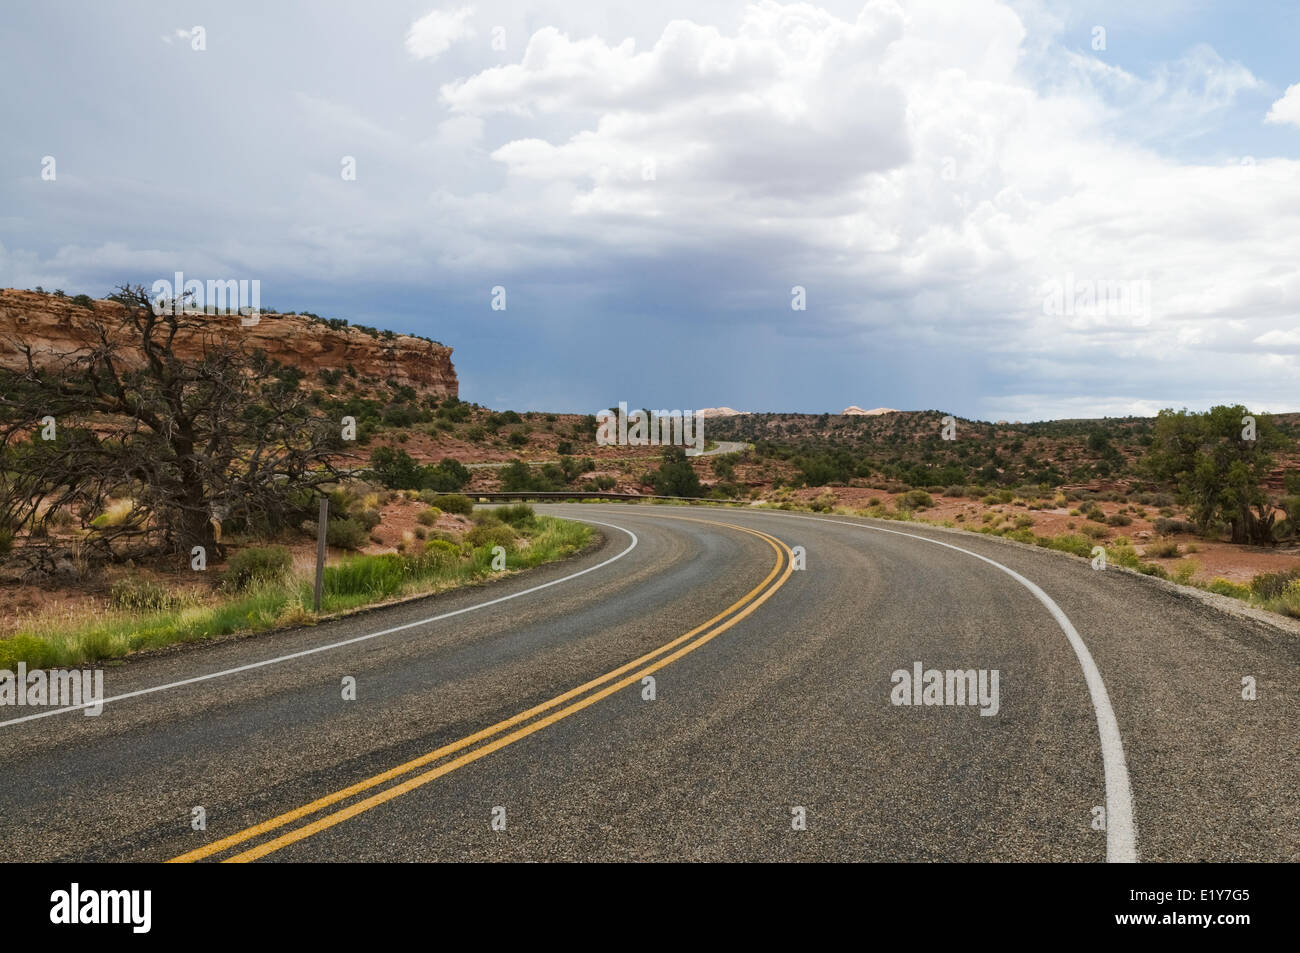 Curving road through the desert Stock Photo